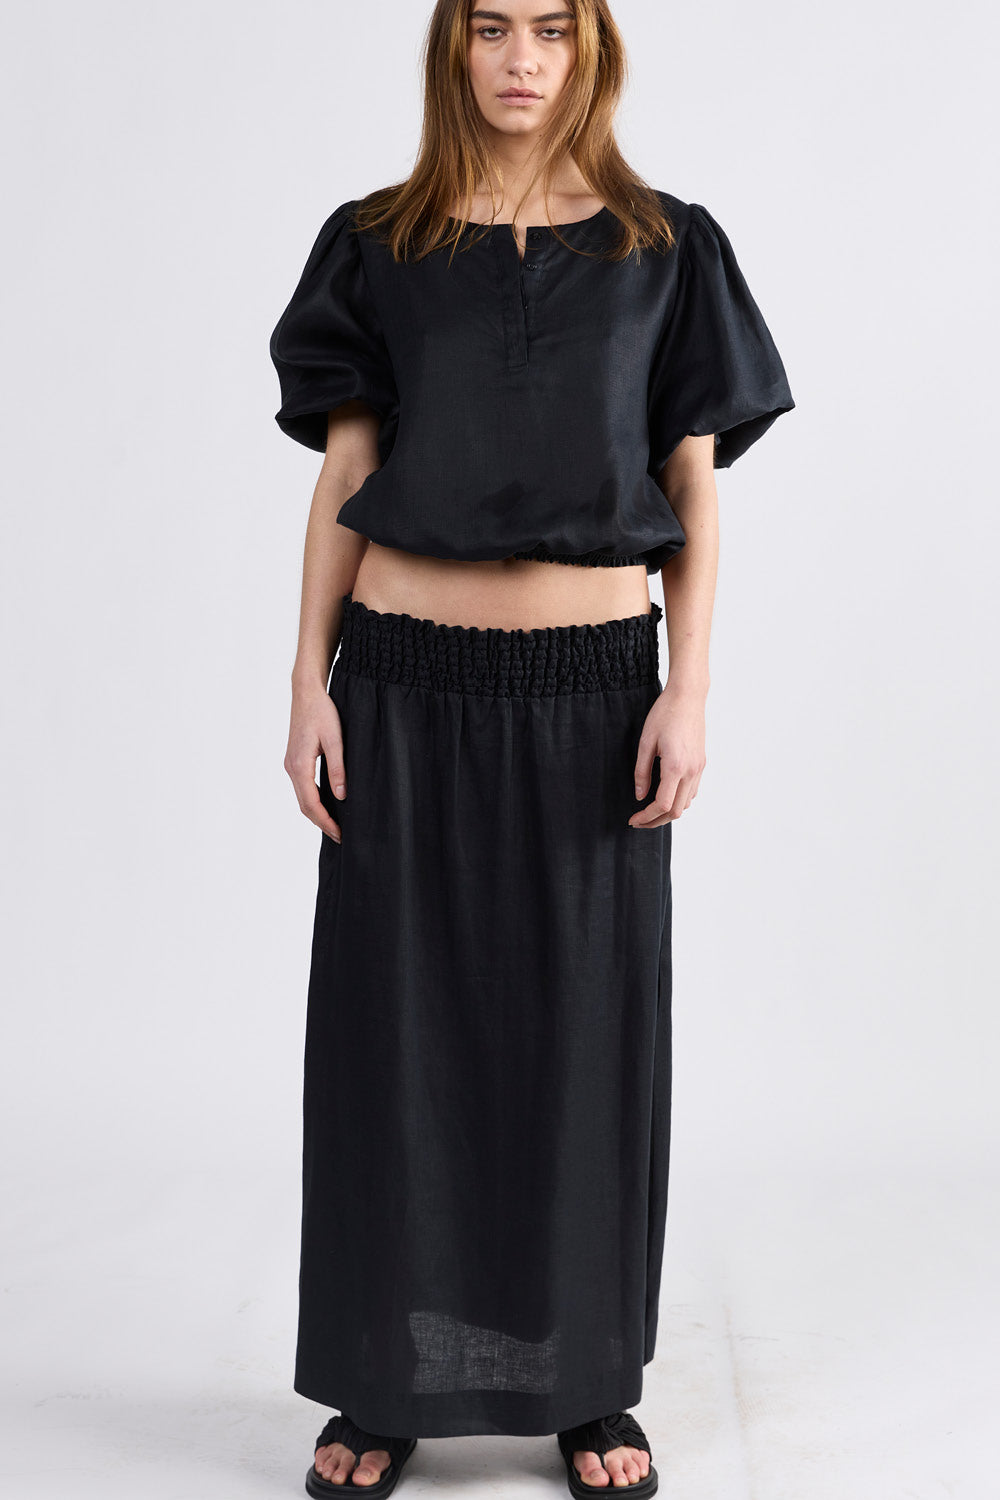 Mojito Skirt - Black